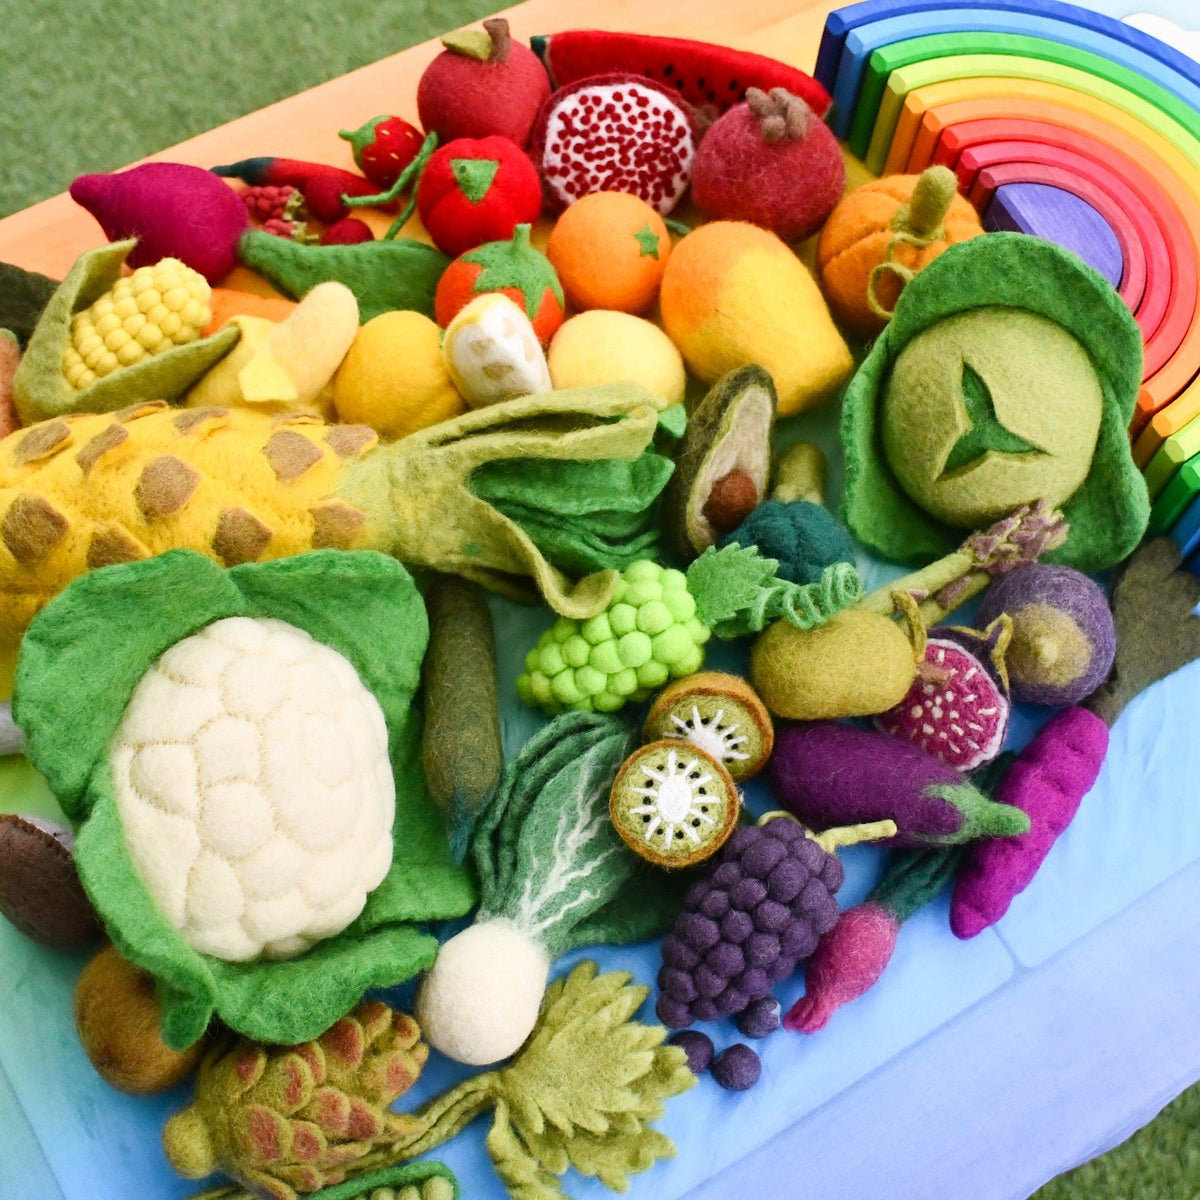 Felt Vegetables and Fruits Set - 11 pieces